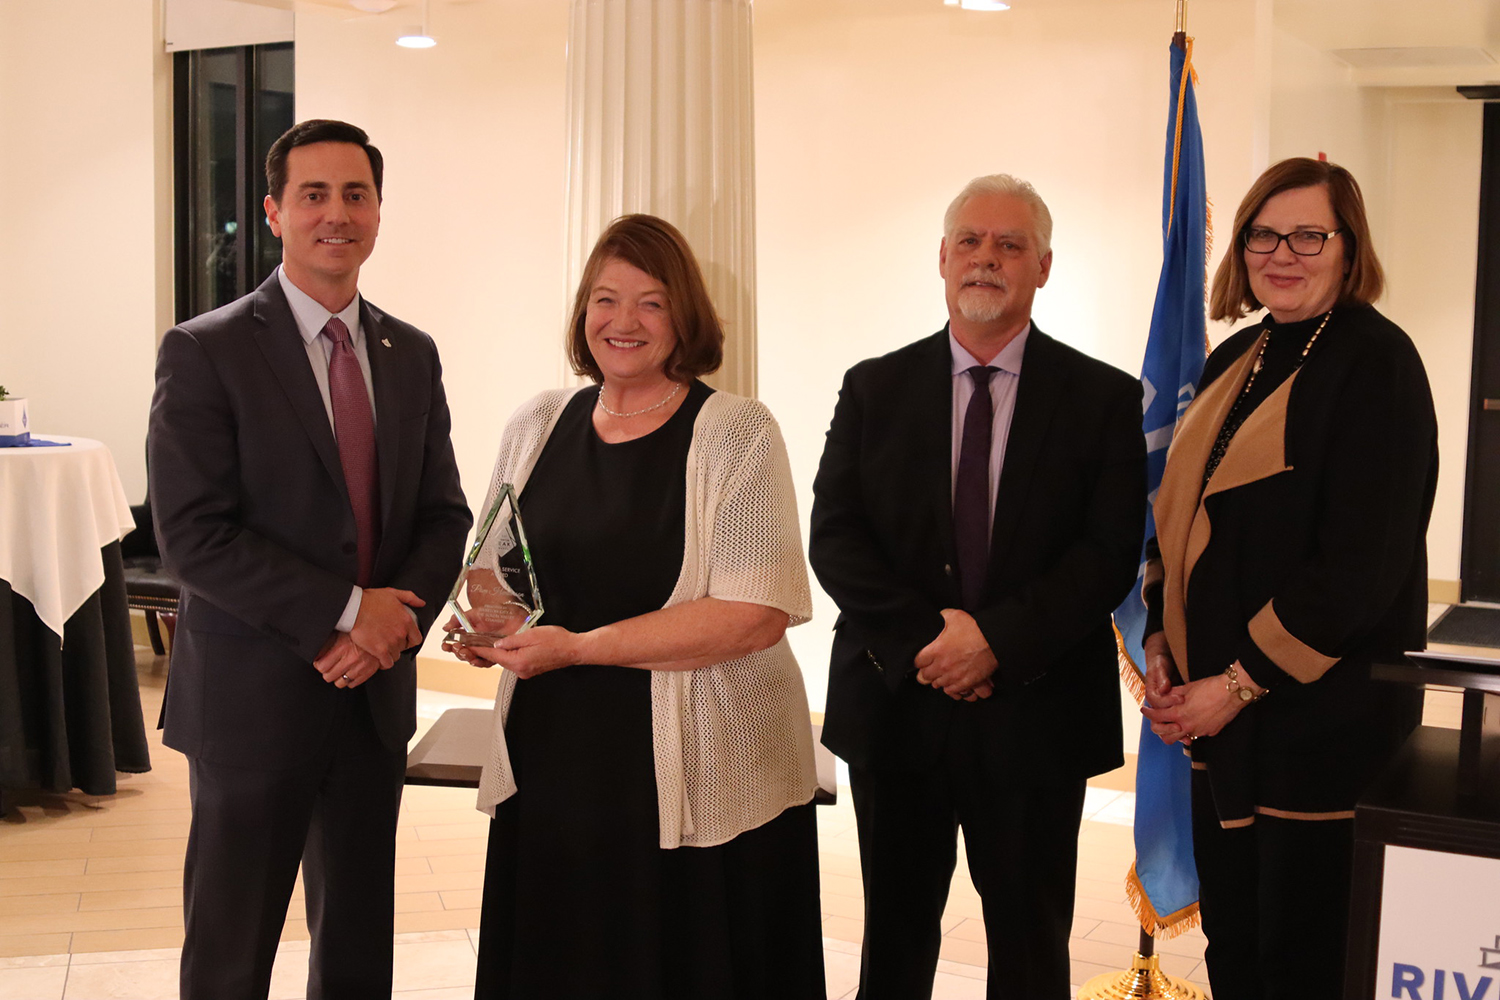 Mayor's Service Award: Pam Henderson